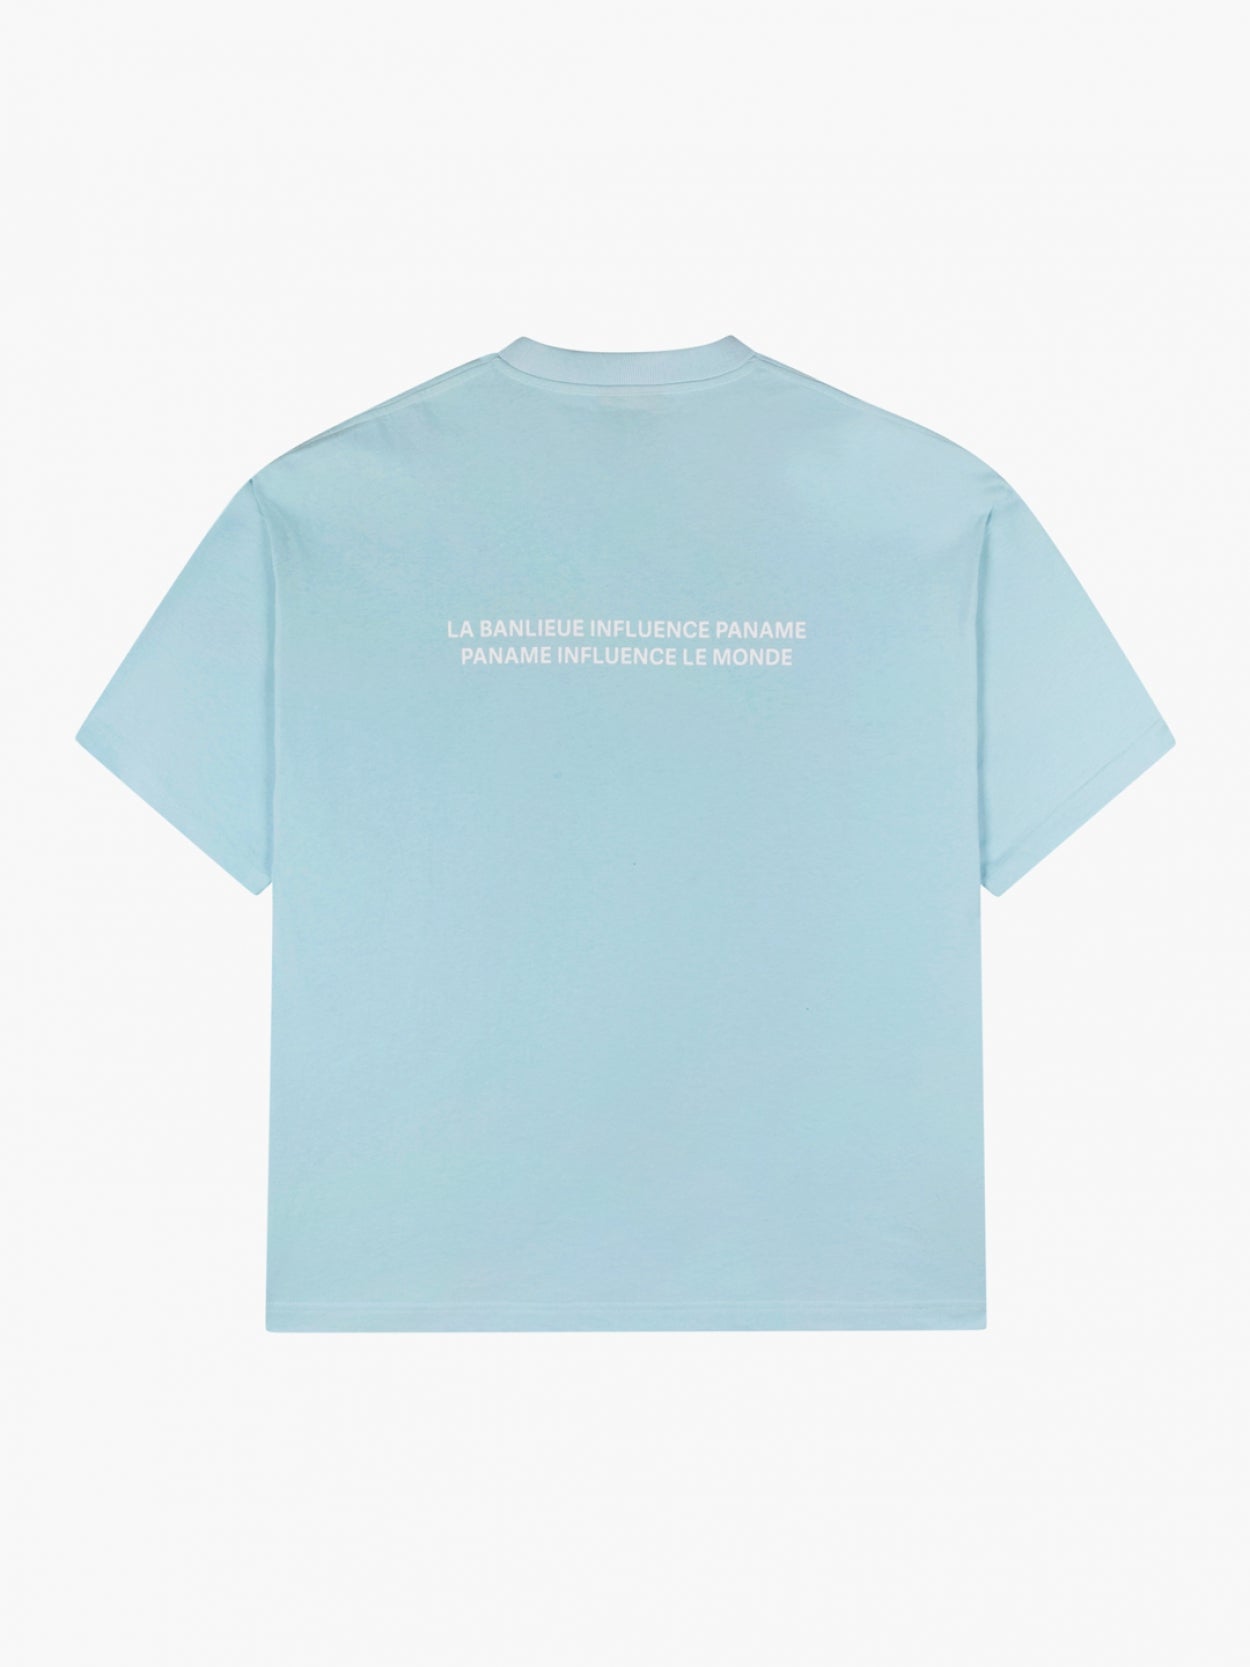 Paname T-shirt sky blue | BANLIEUE